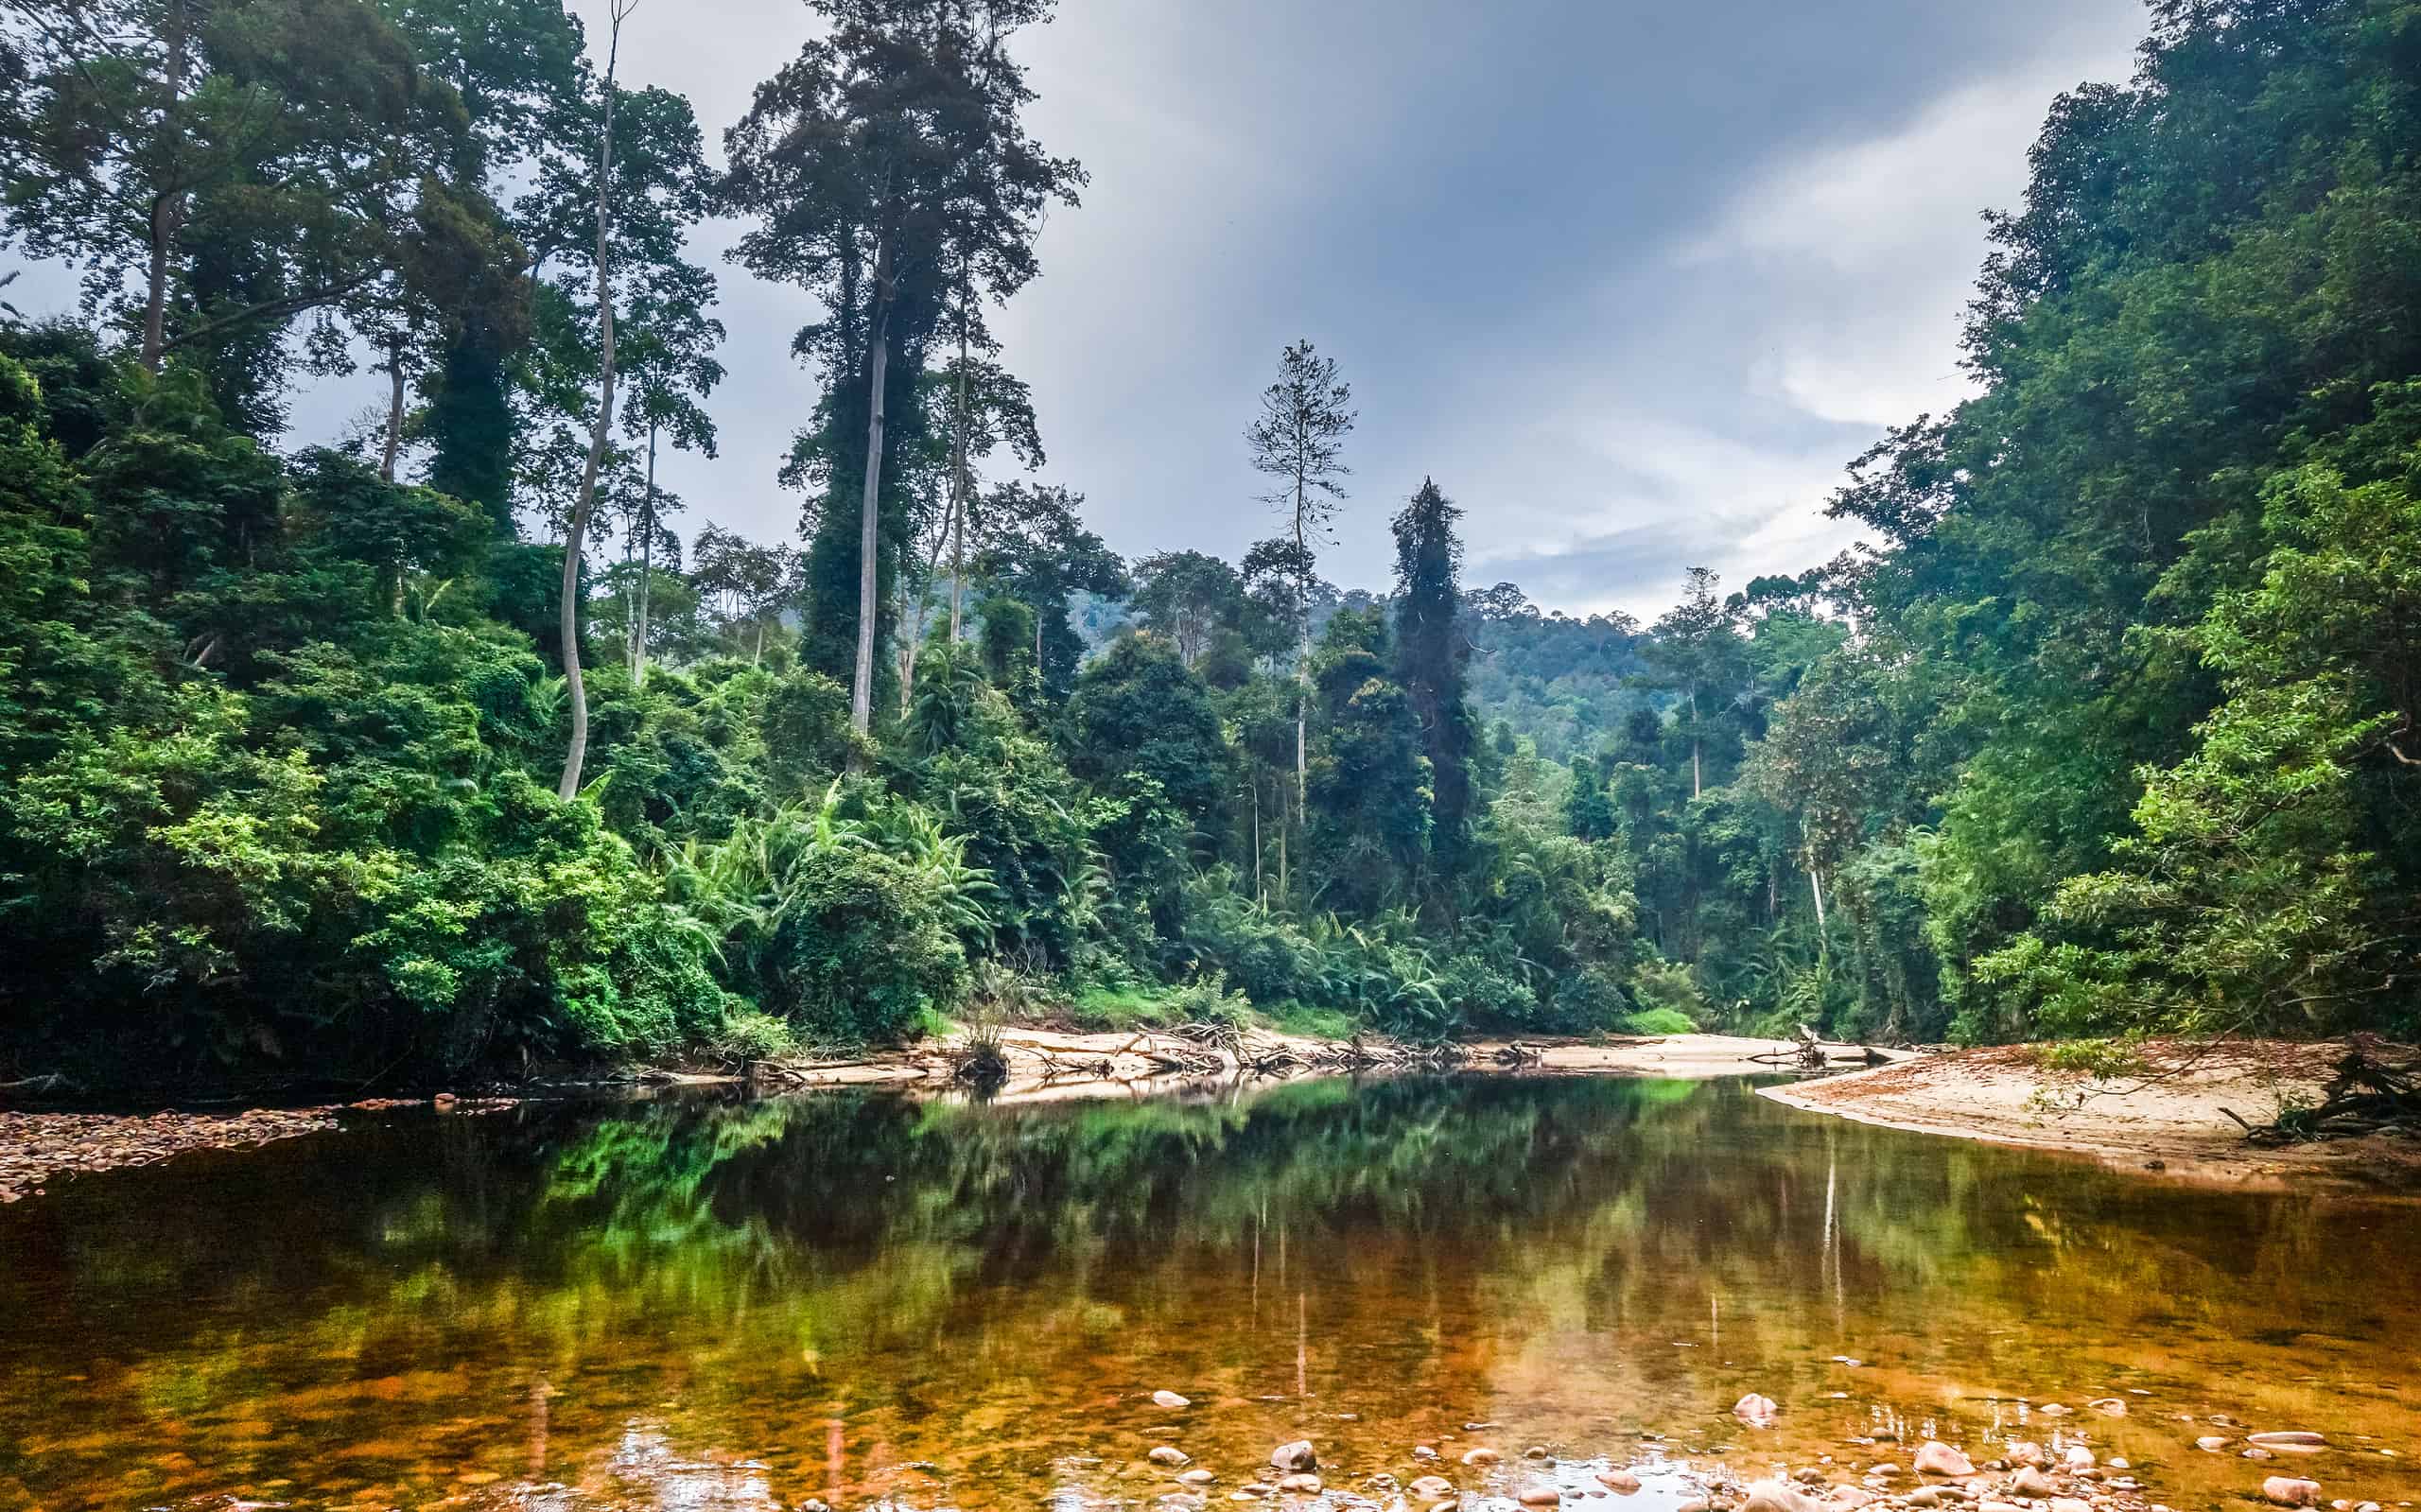 River in Jungle rainforest Taman Negara national park, Malaysia